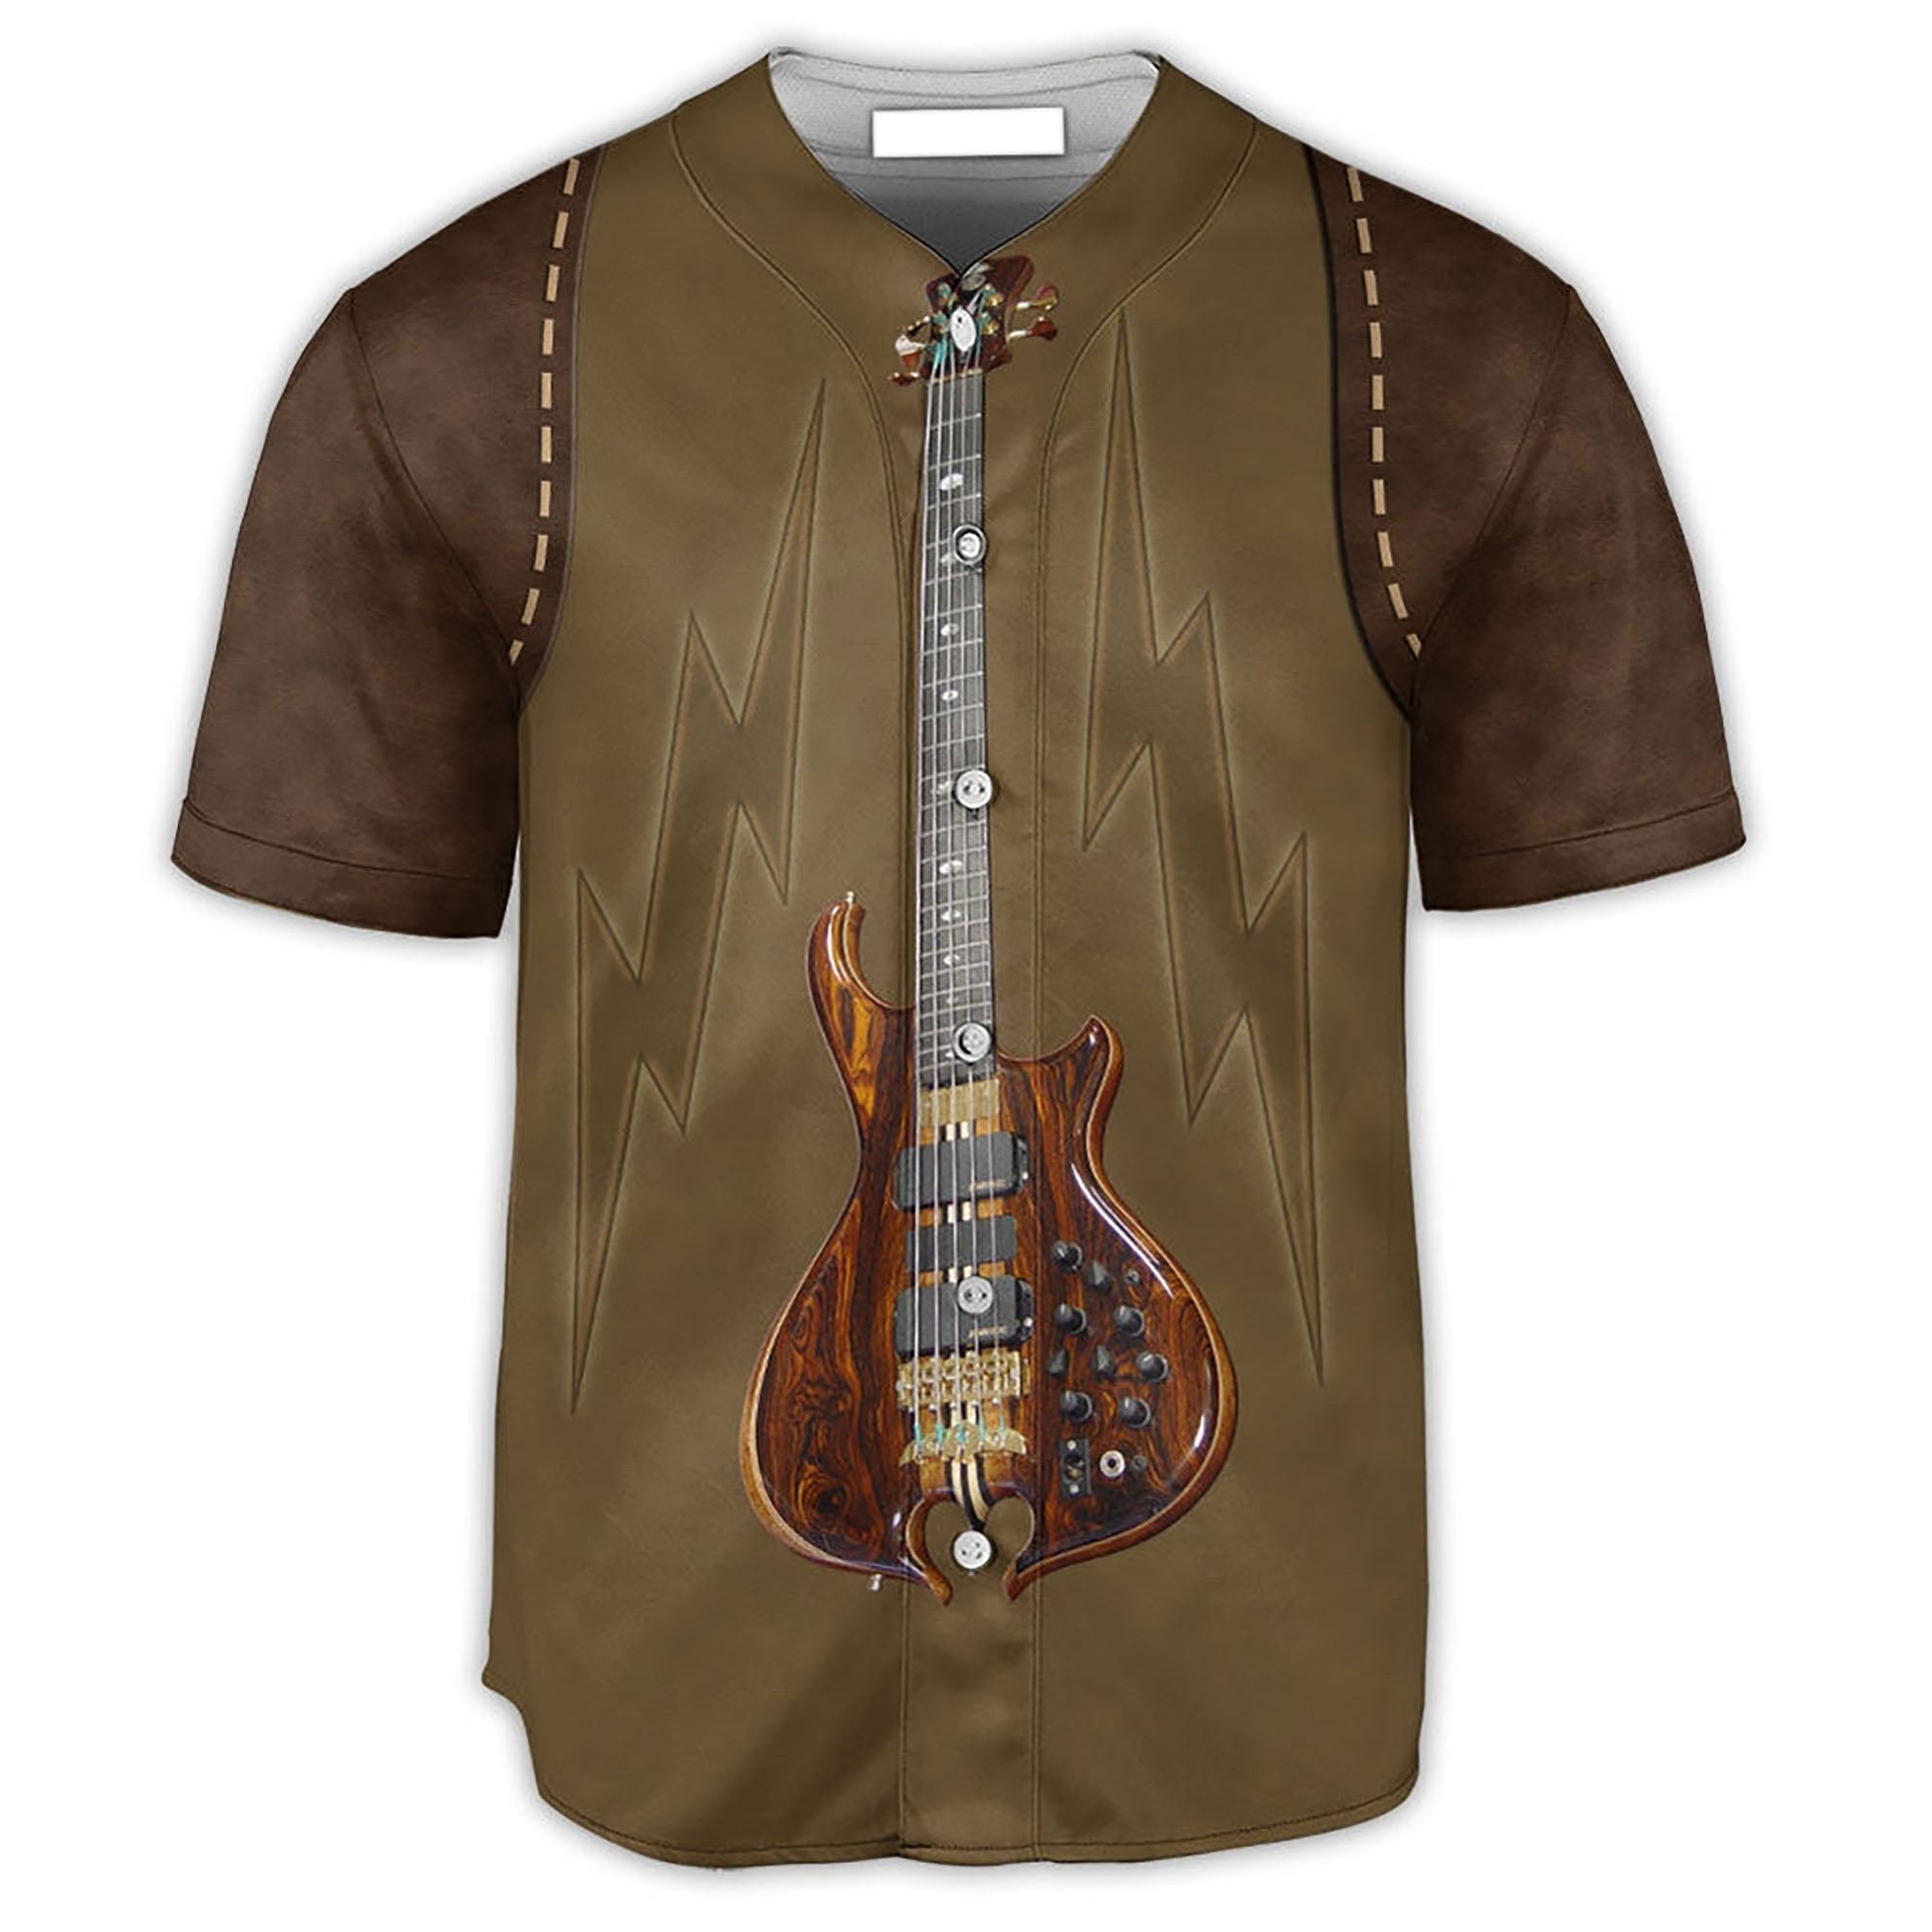 Guitar Music Amazing Guitar Vintage Baseball Jersey/ Idea Gift for Guitar Lover